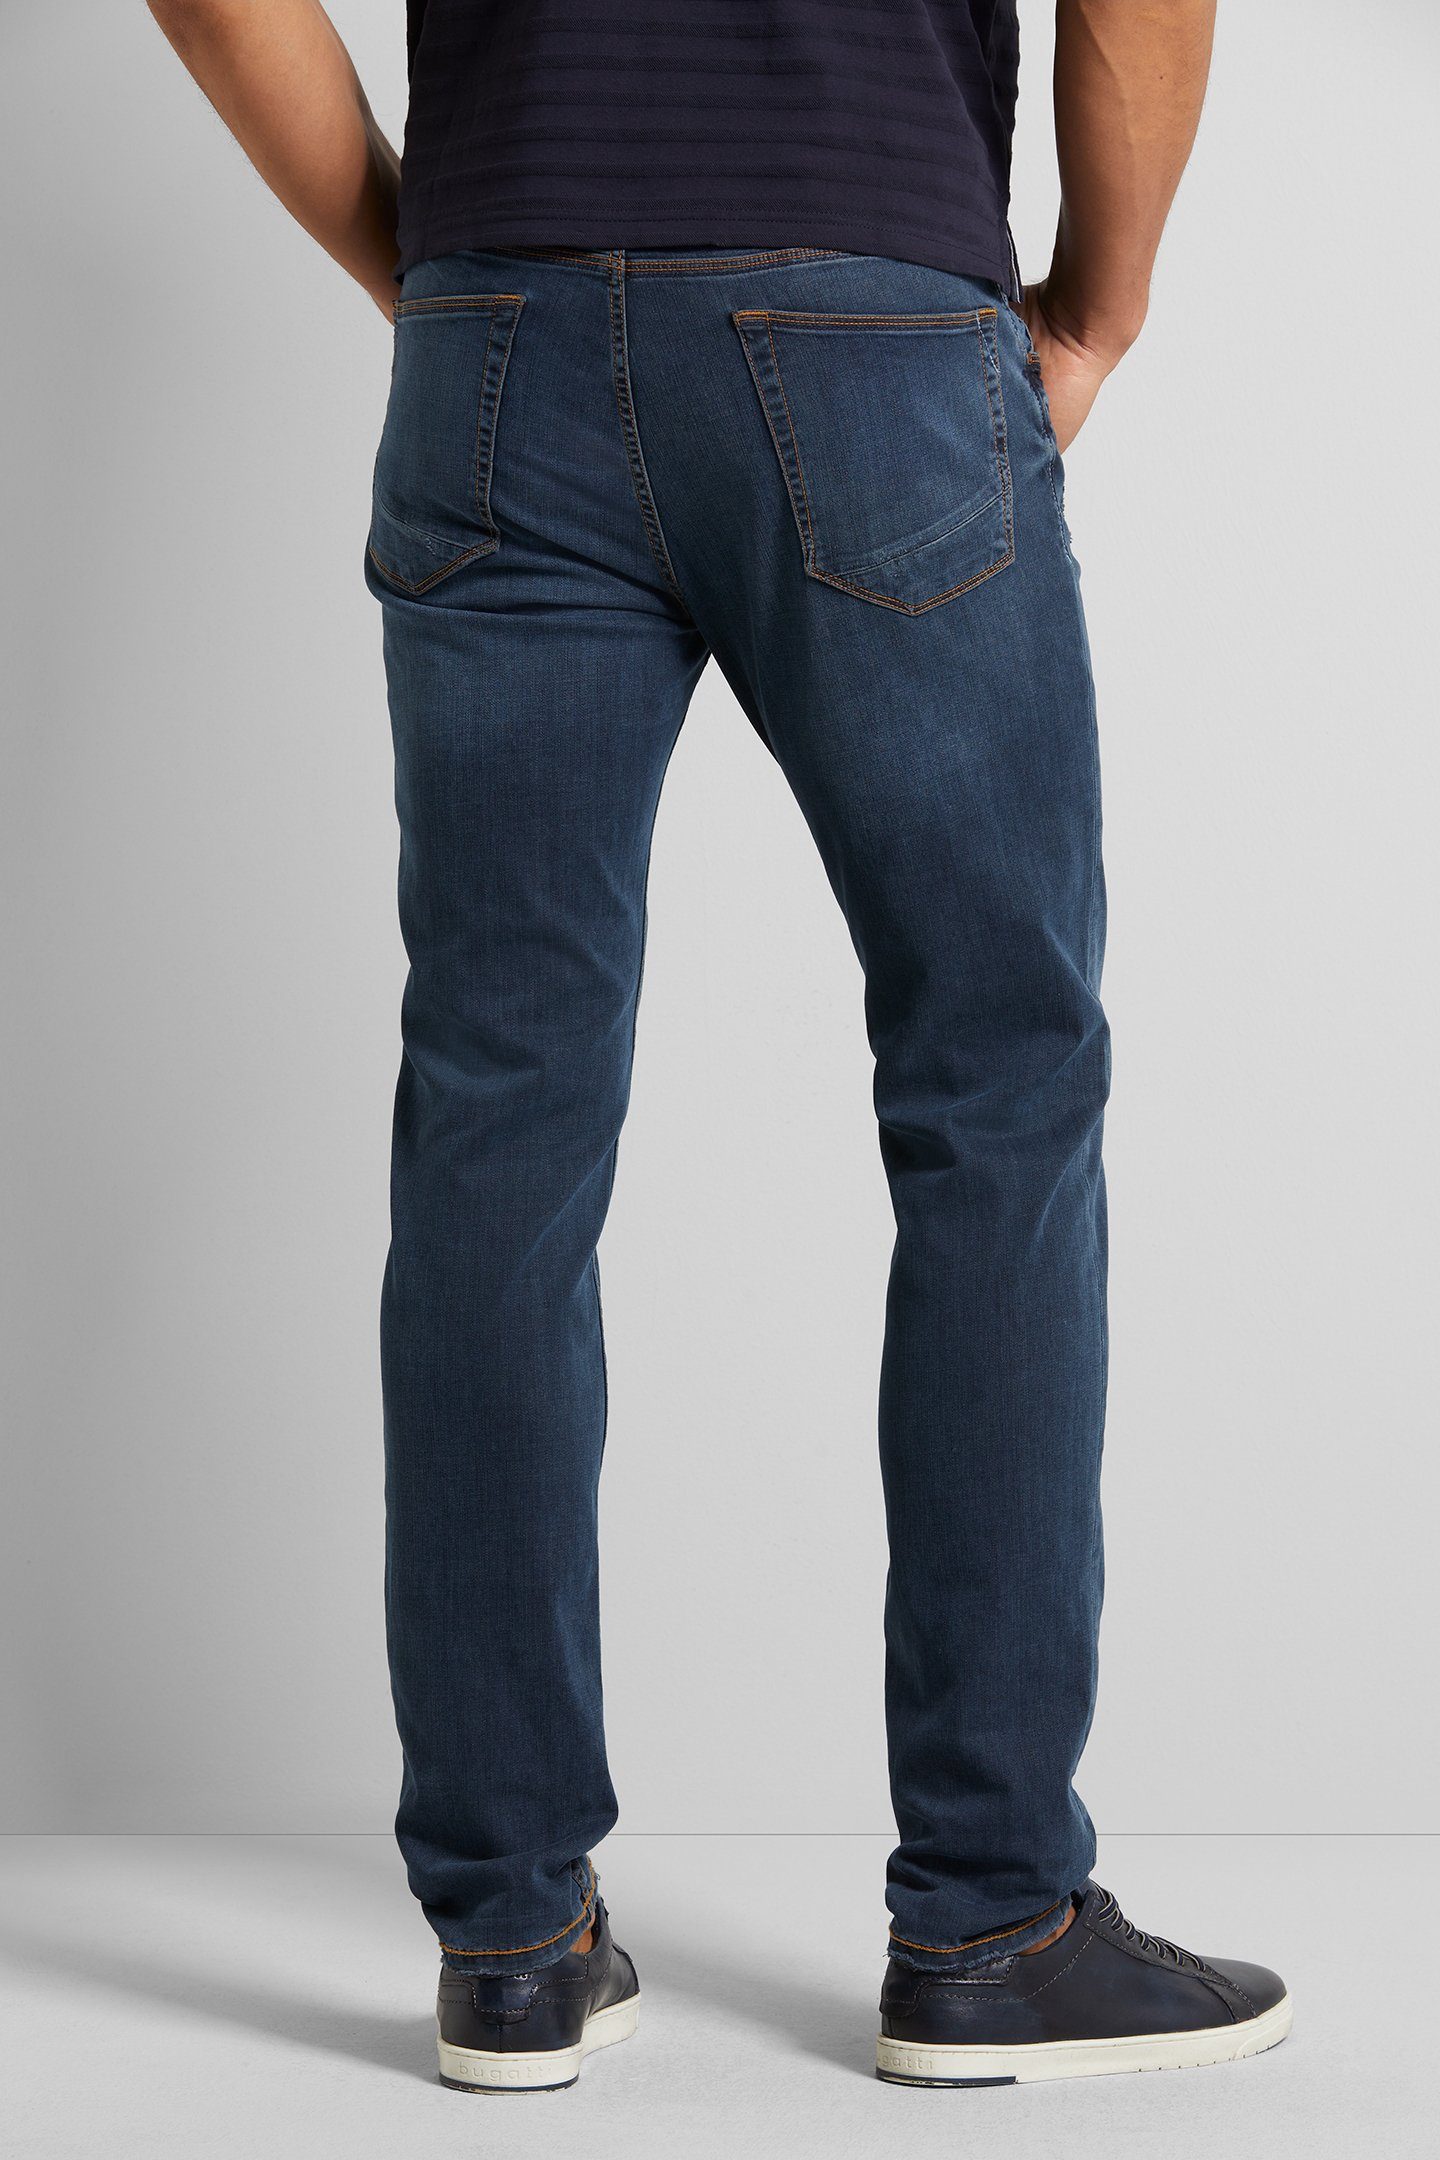 bugatti 5-Pocket-Jeans aus der Respect Kollektion Nature dunkelblau